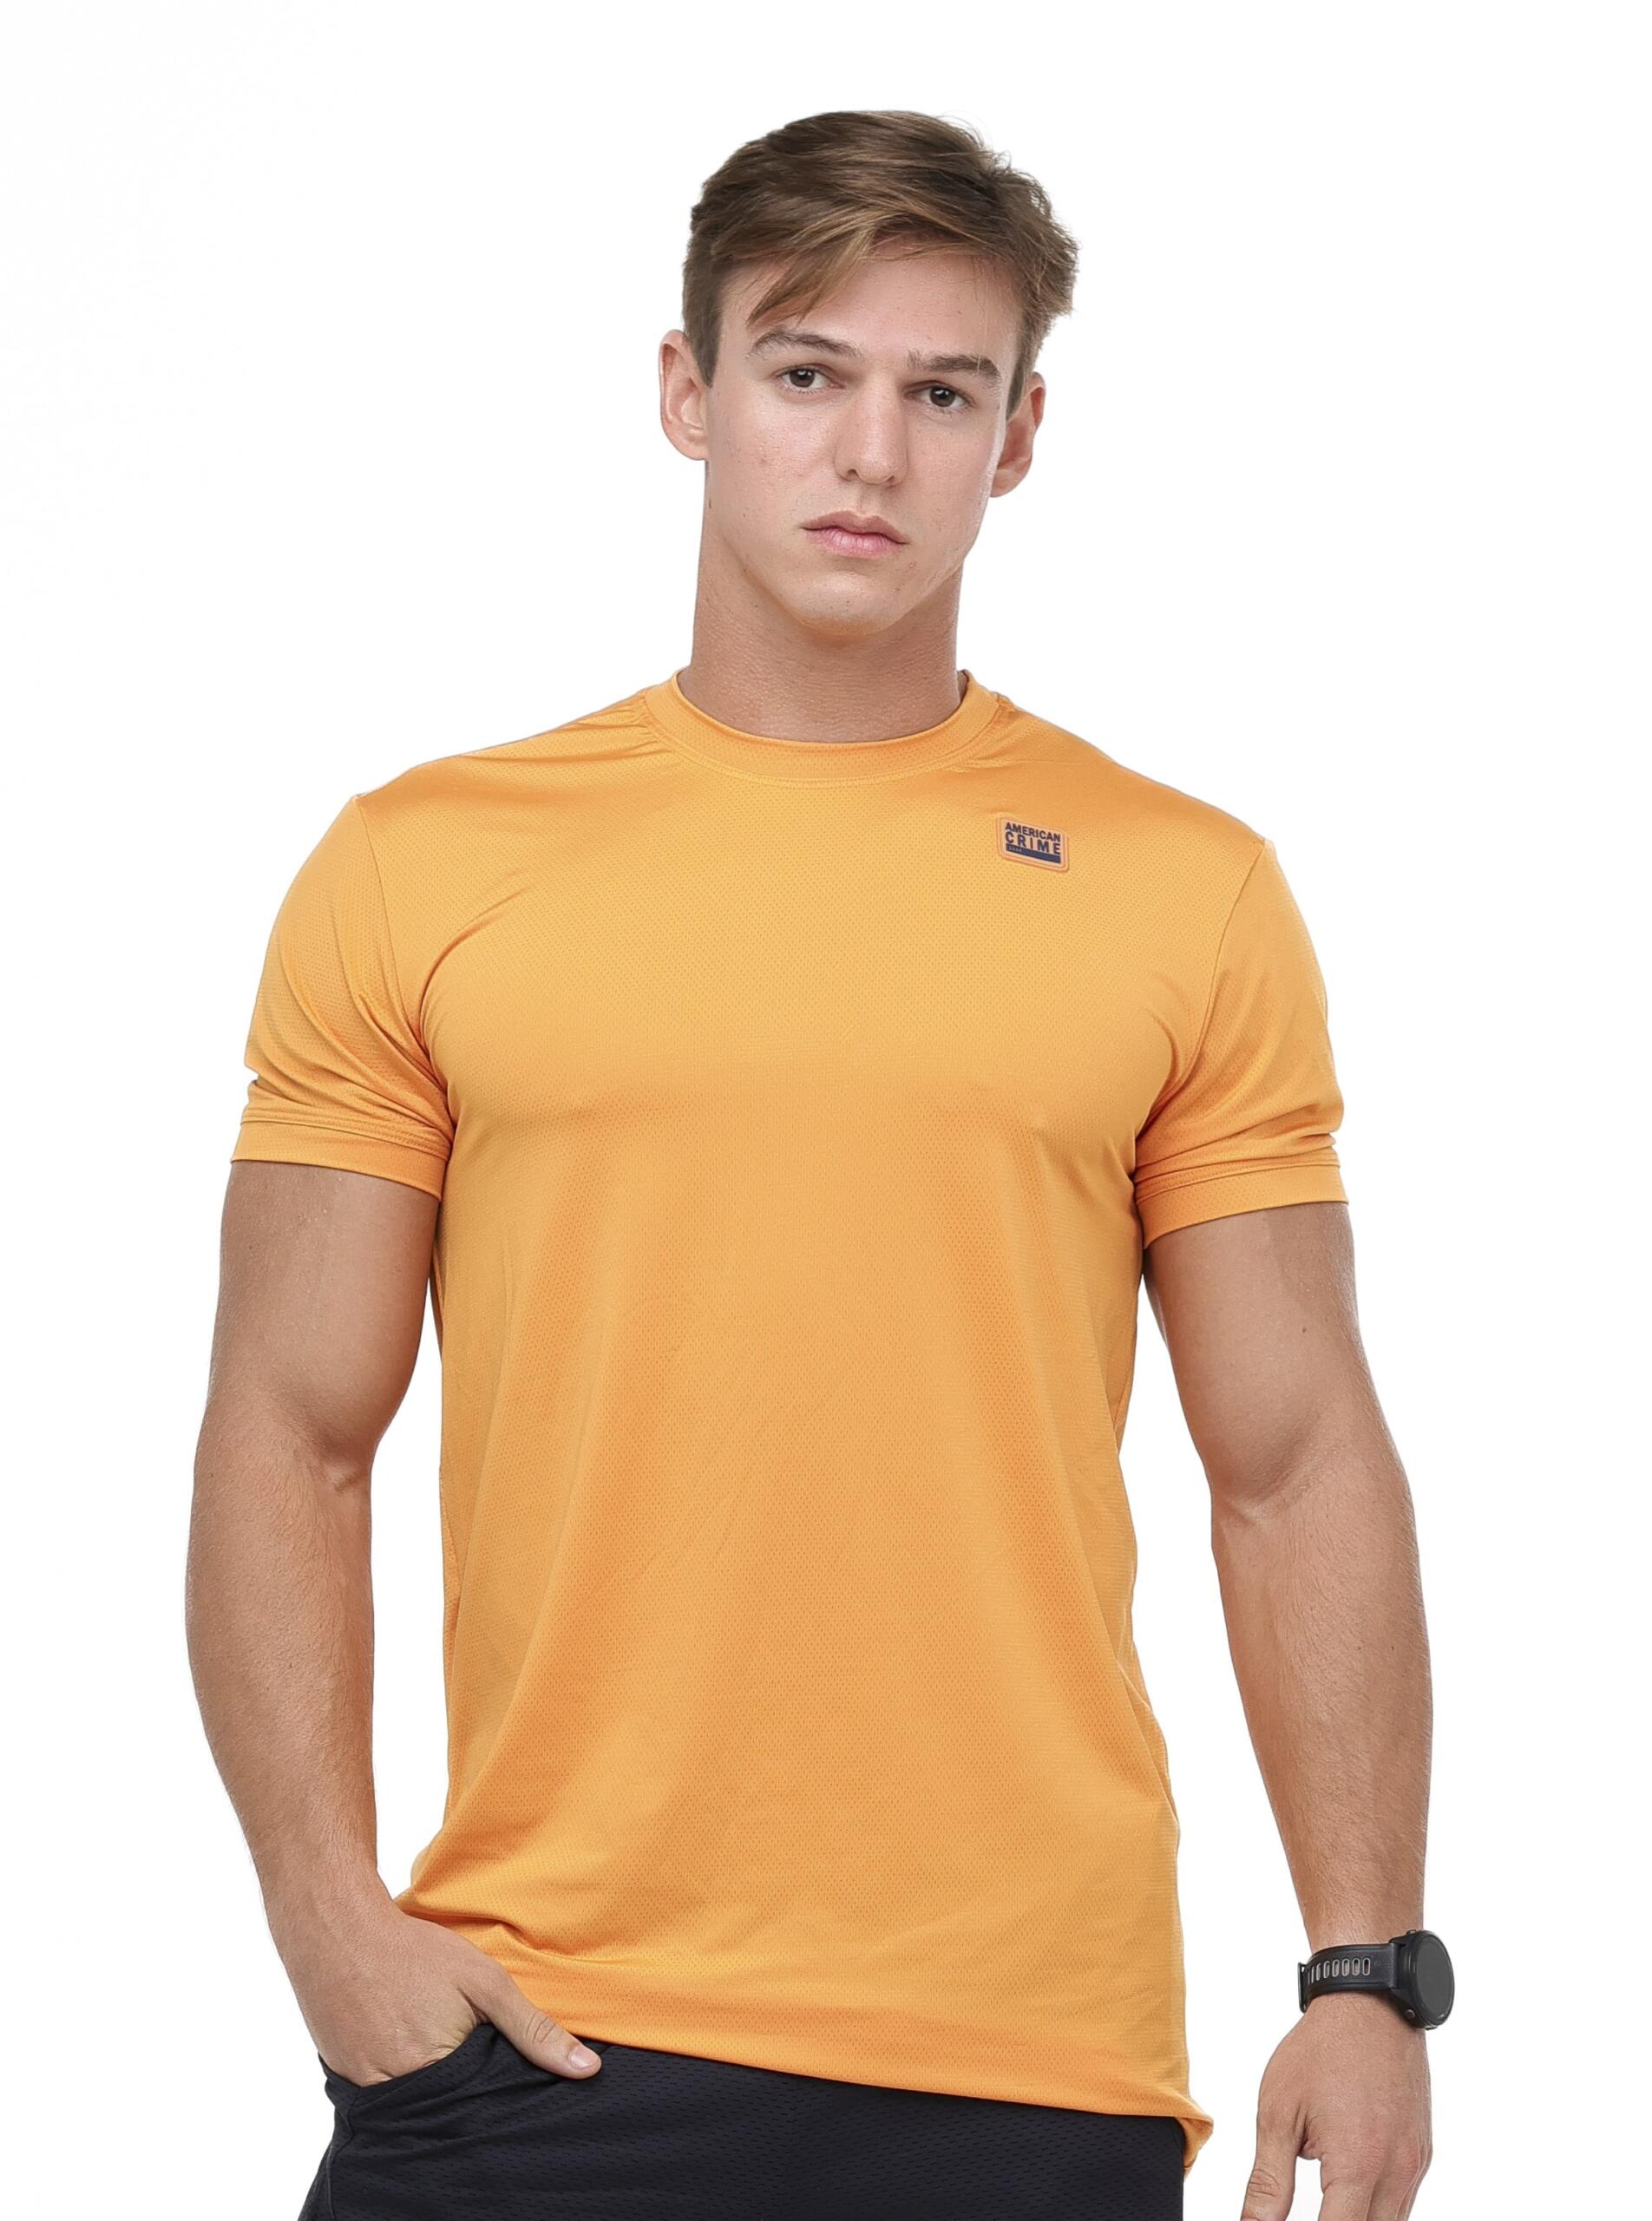 Camiseta masculina CONFIRMAR TECIDO amber ACFIT2-min